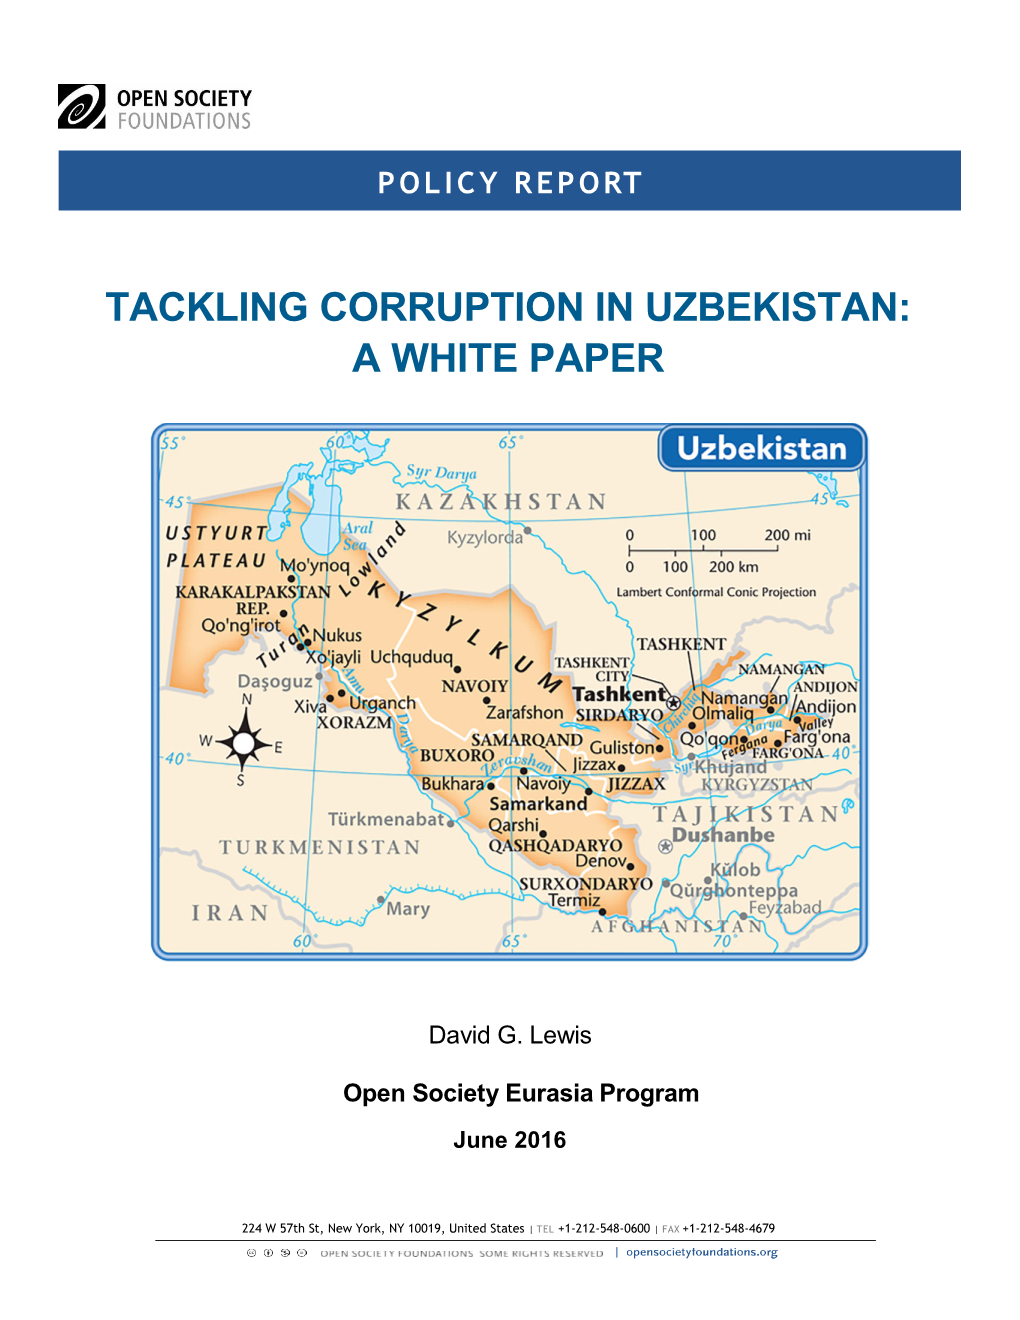 Tackling Corruption in Uzbekistan: a White Paper